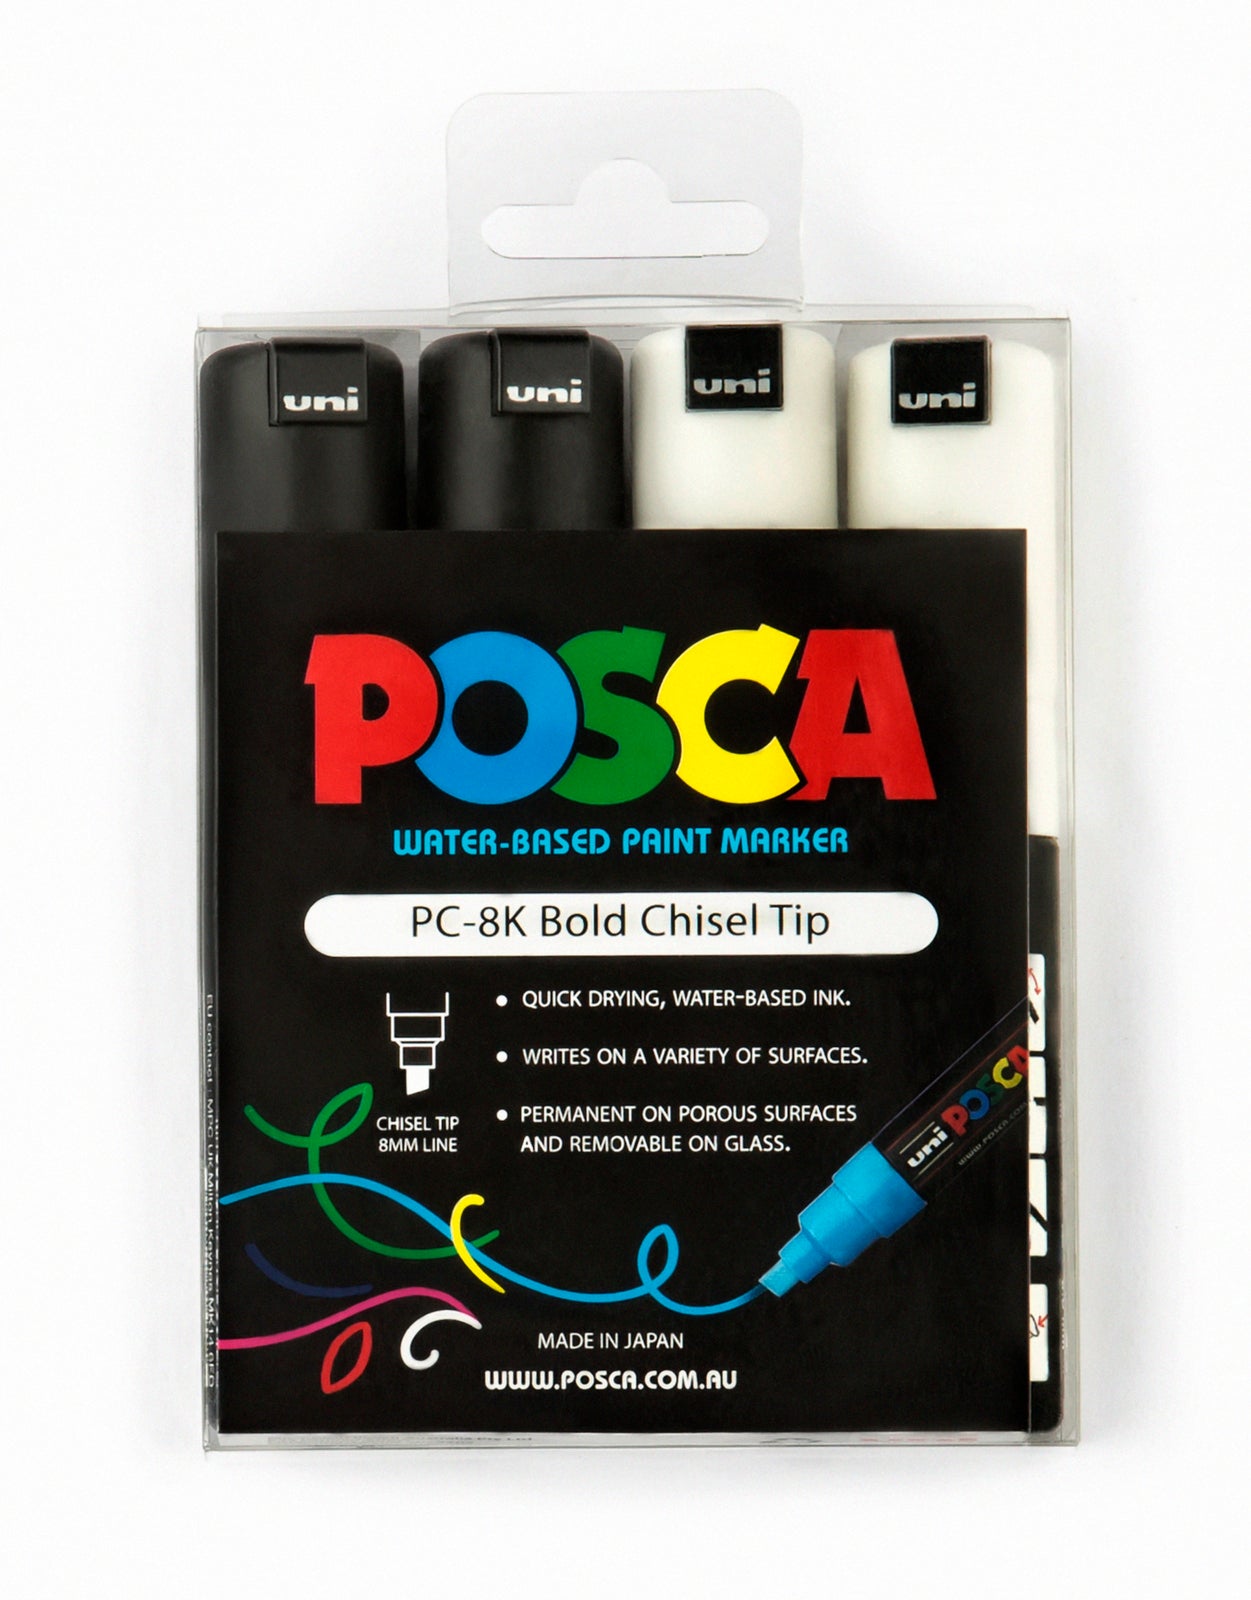 POSCA PC-8K Bold Chisel Tip 8.0mm line - Black and White 4 pack